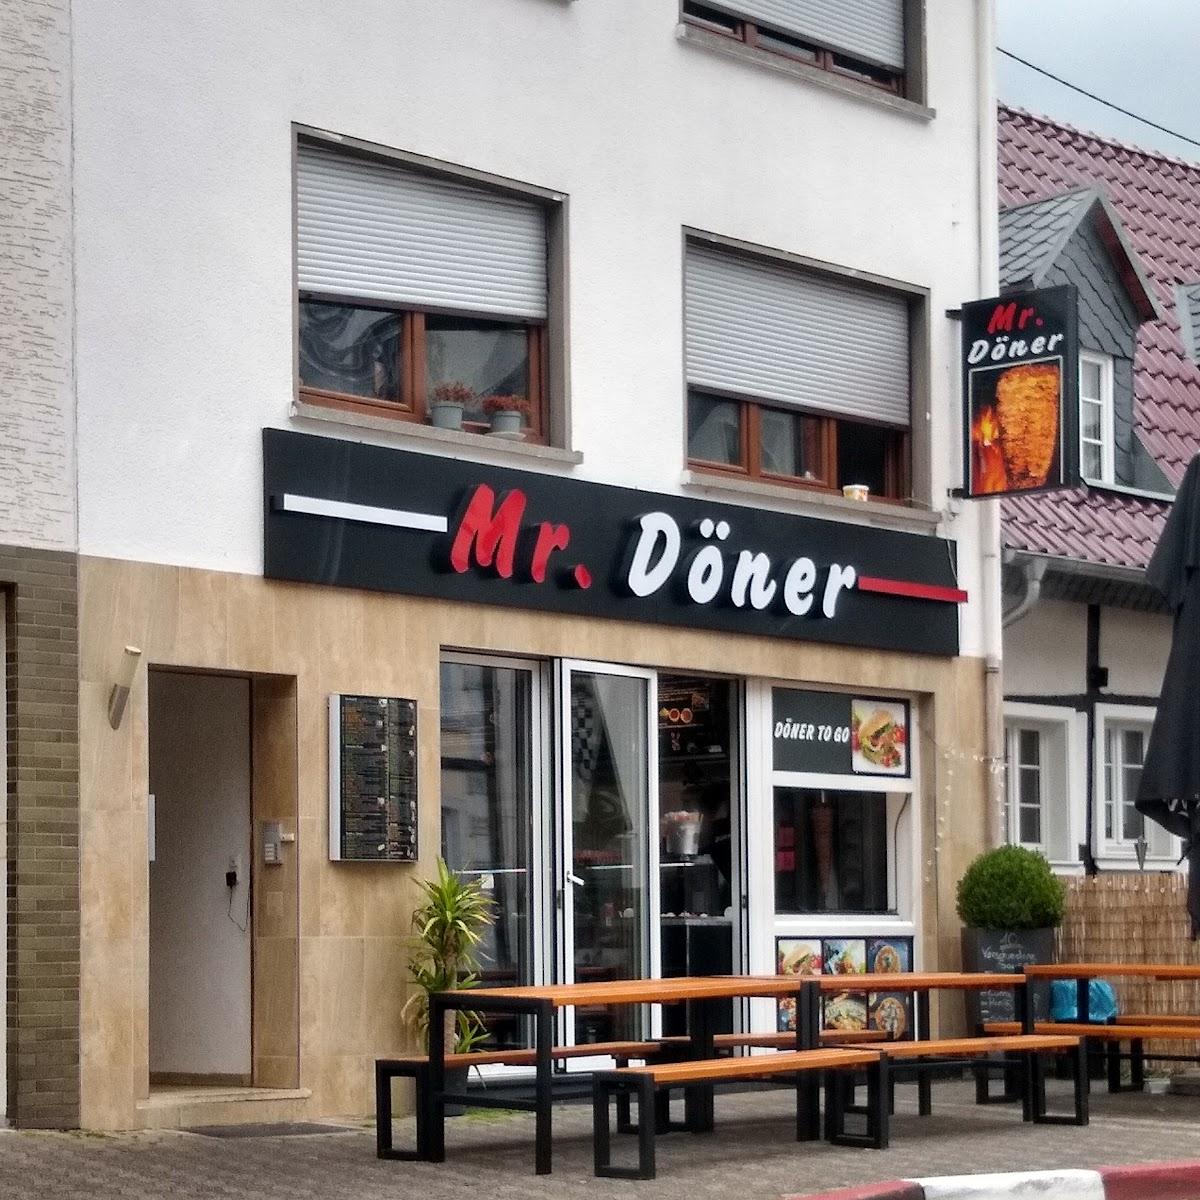 Restaurant "Mr.Döner" in Adenau